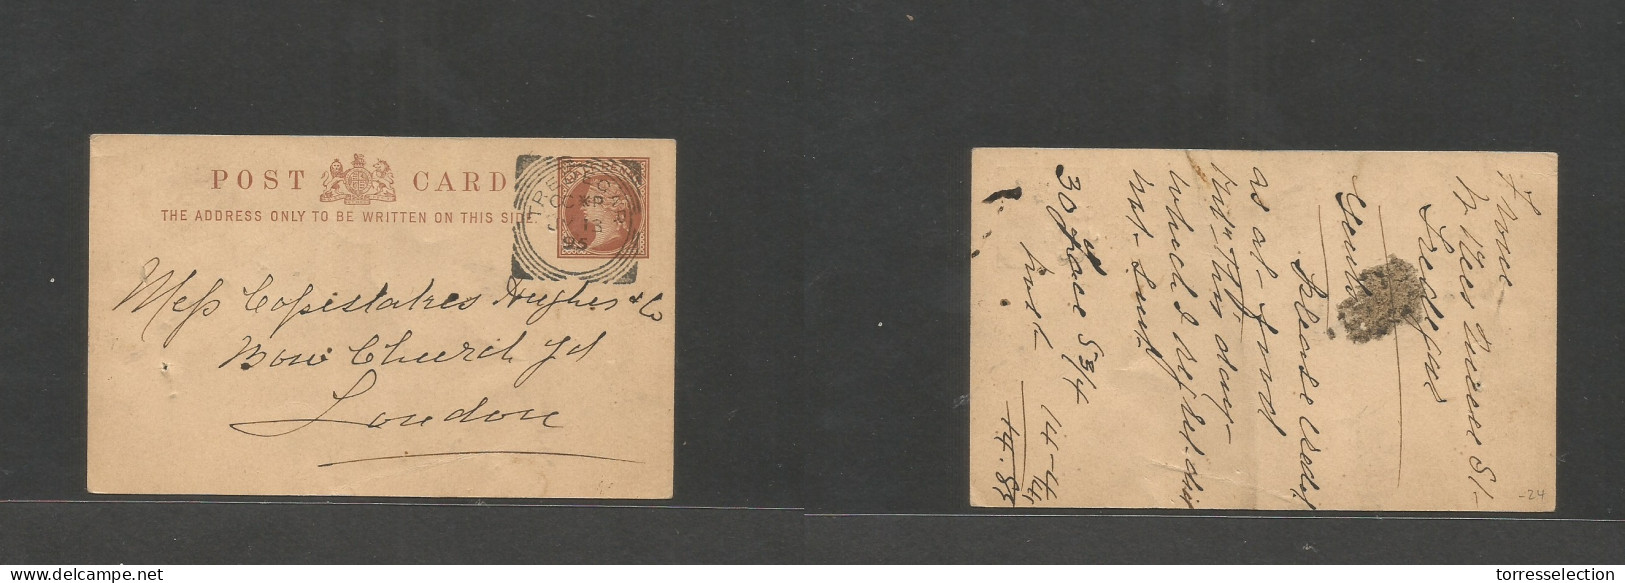 Great Britain - XX. 1895 (16 July) Trededegar - London, 1/2d Brown Stat Card. VF Origin Small Po Village. - ...-1840 Vorläufer